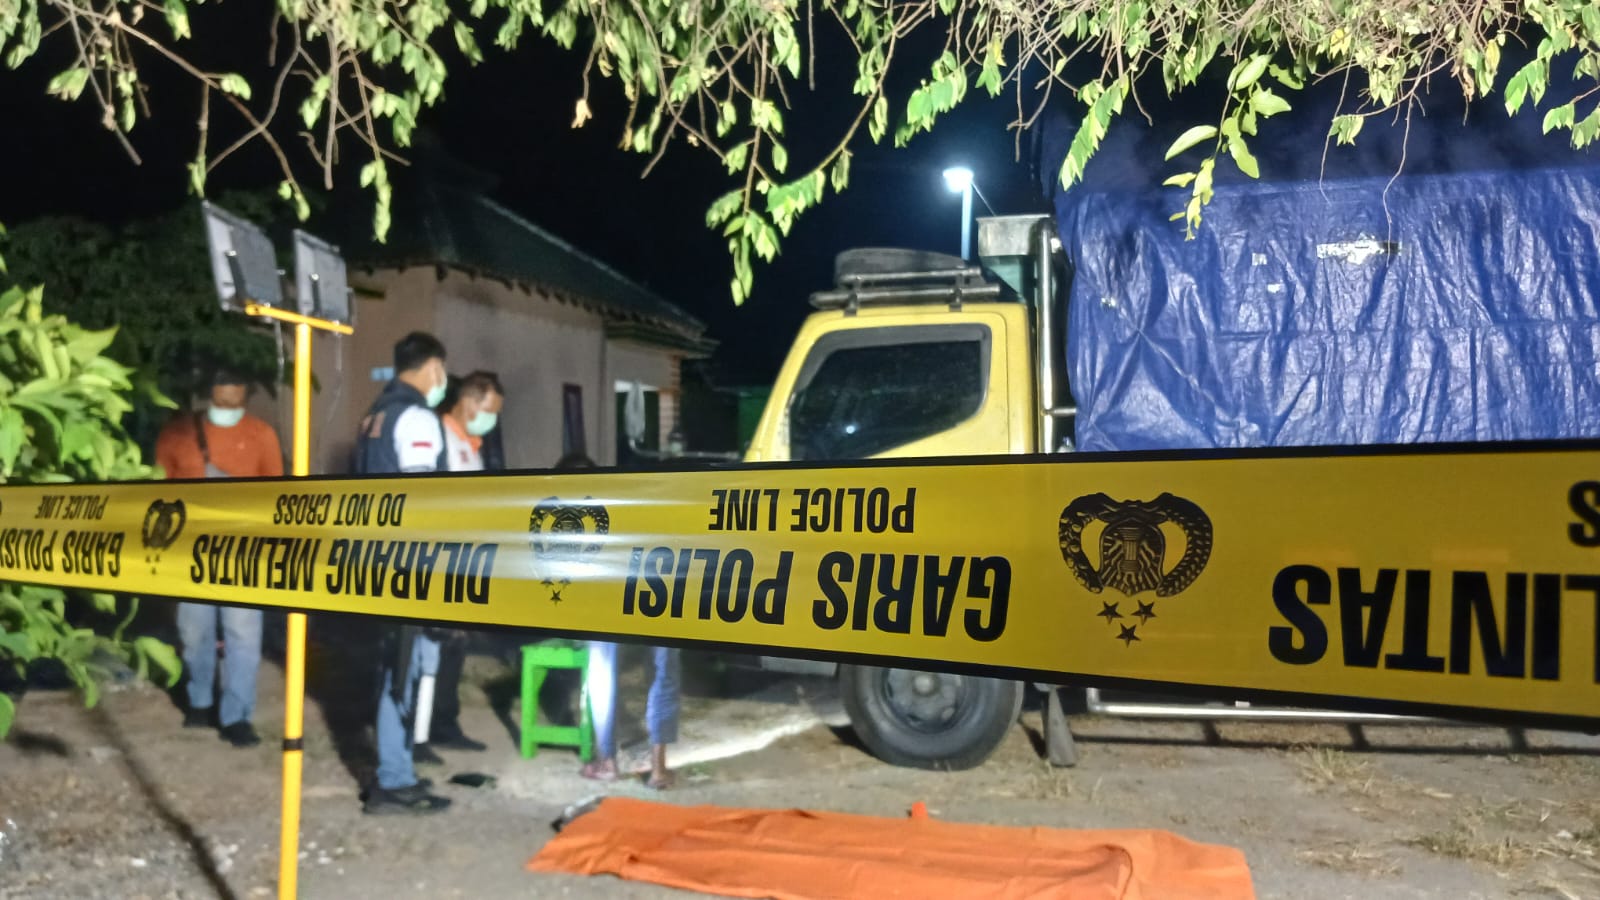 Ungkap Pelaku Pembunuhan Sopir Truk di Madiun, Polisi Periksa 6 Saksi